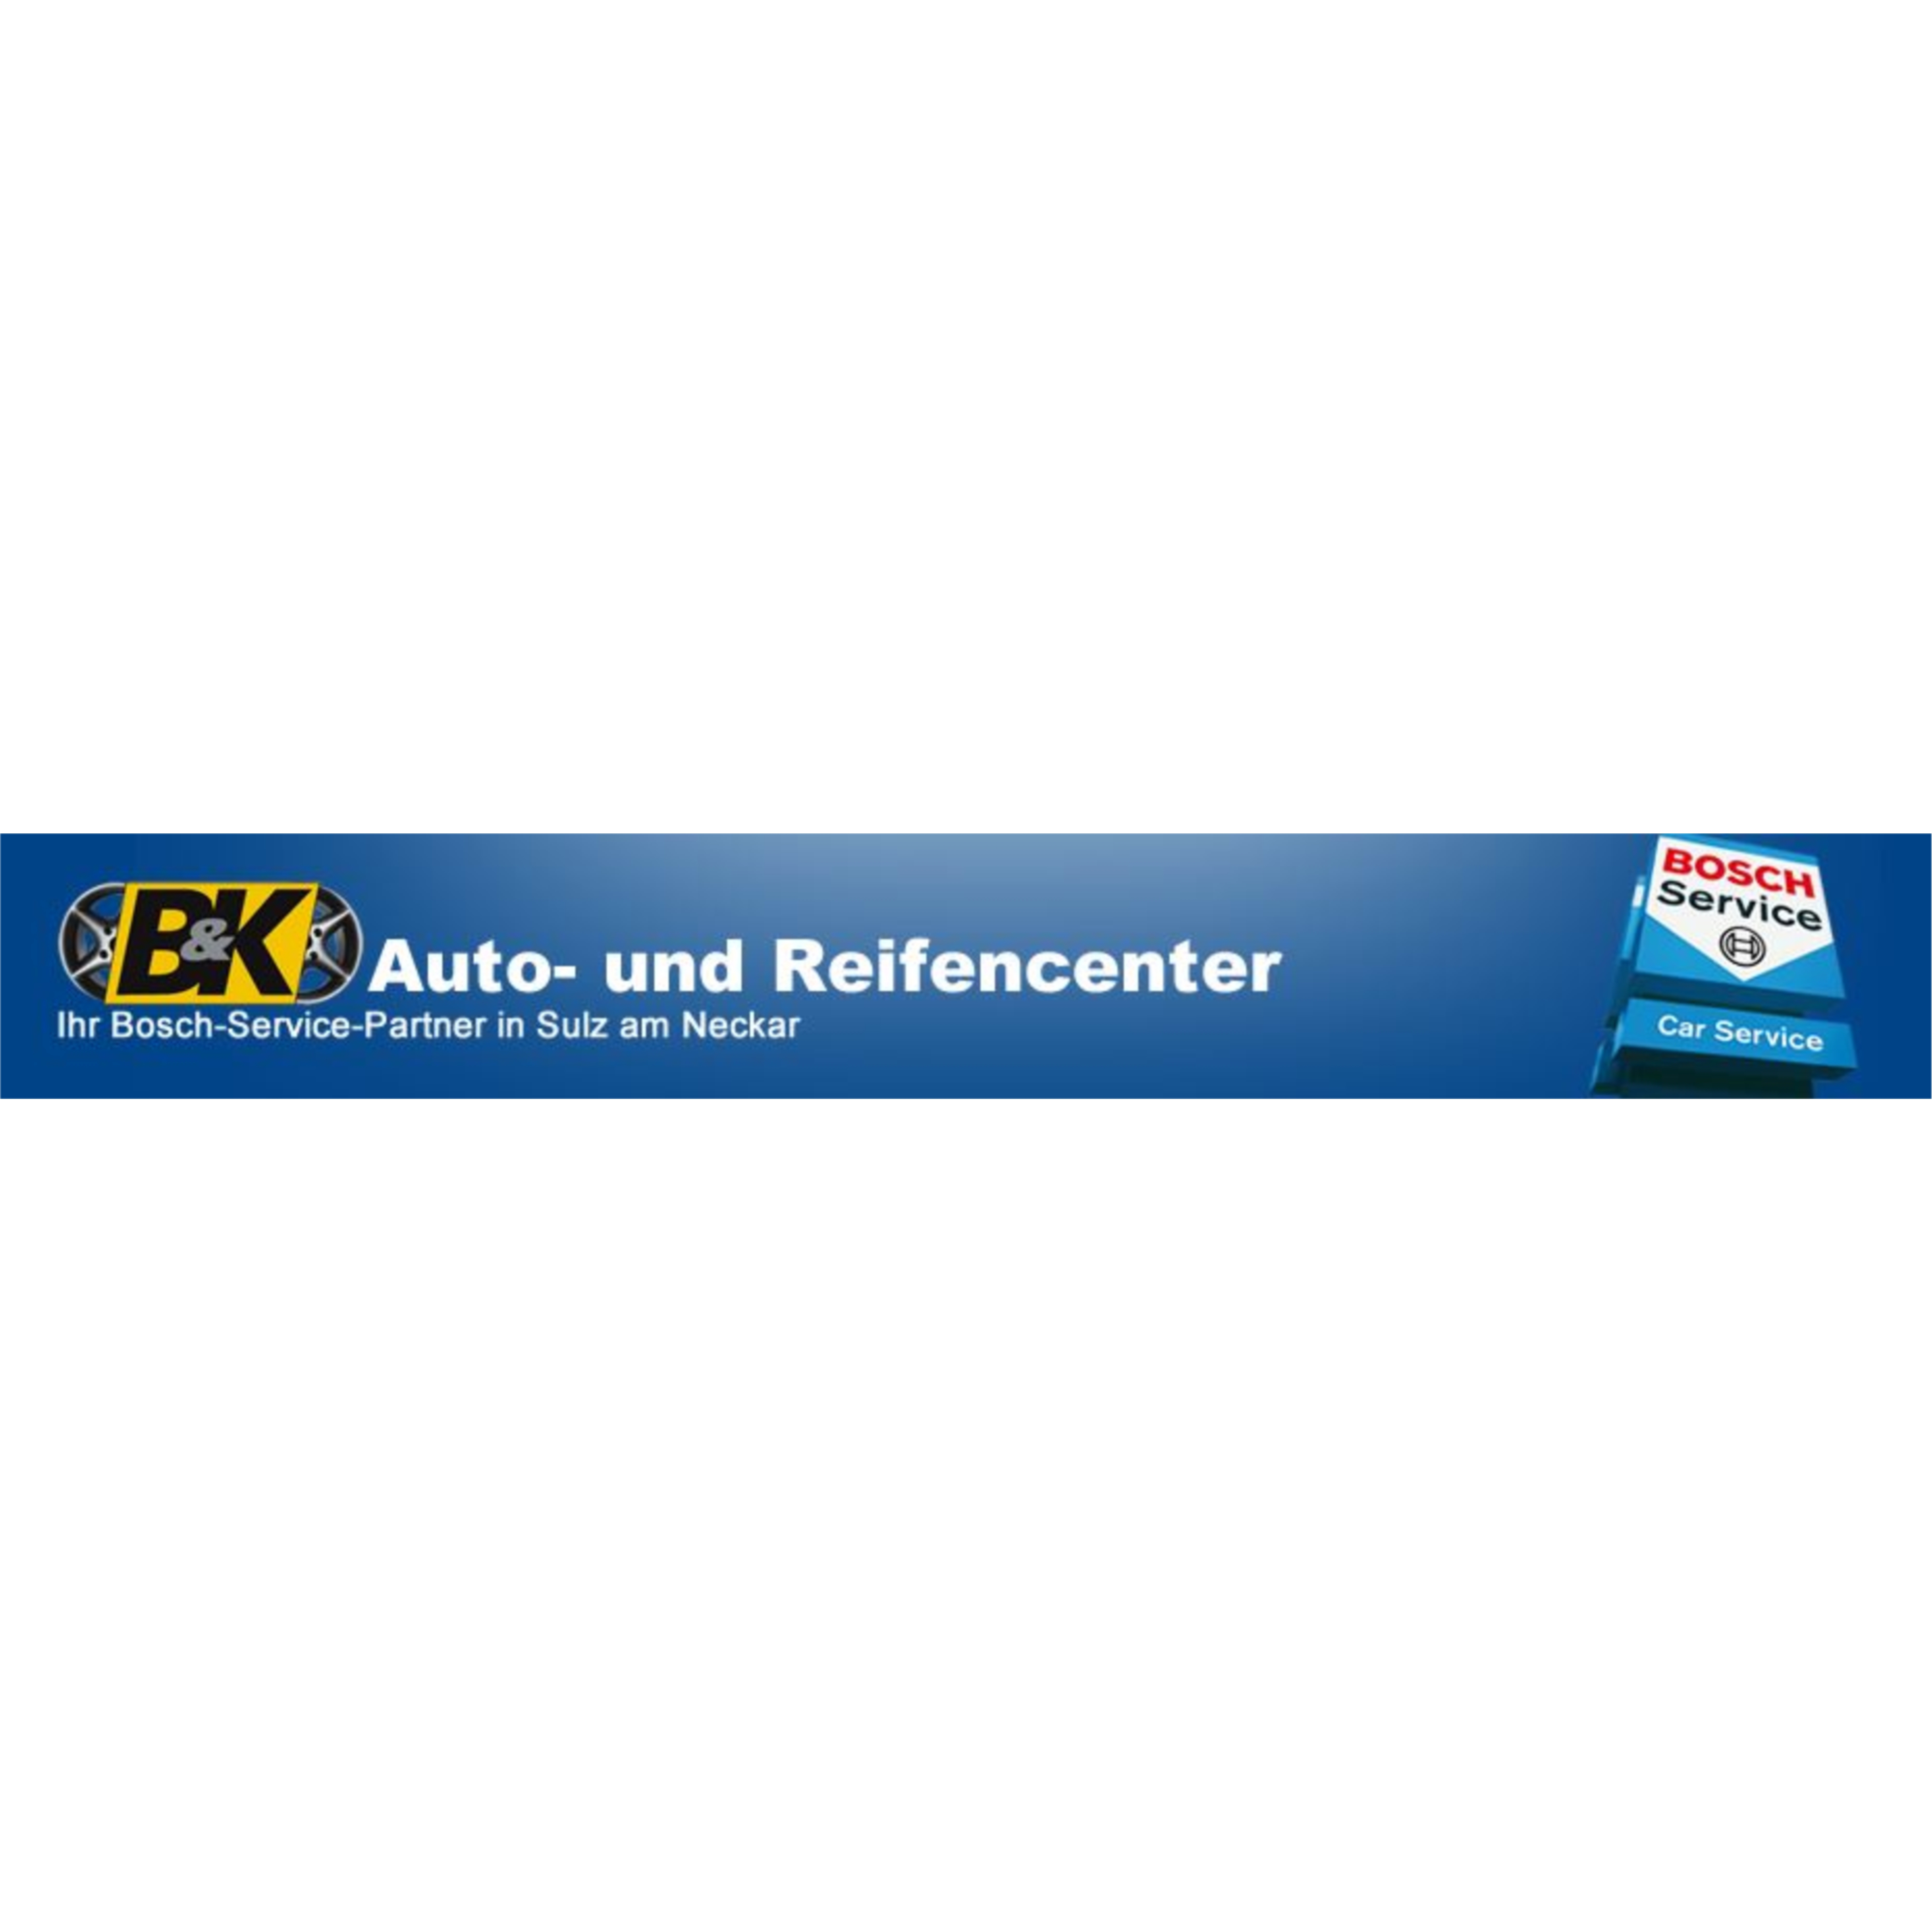 Logo B & K Auto- und Reifencenter e. K. - Bosch Car Service